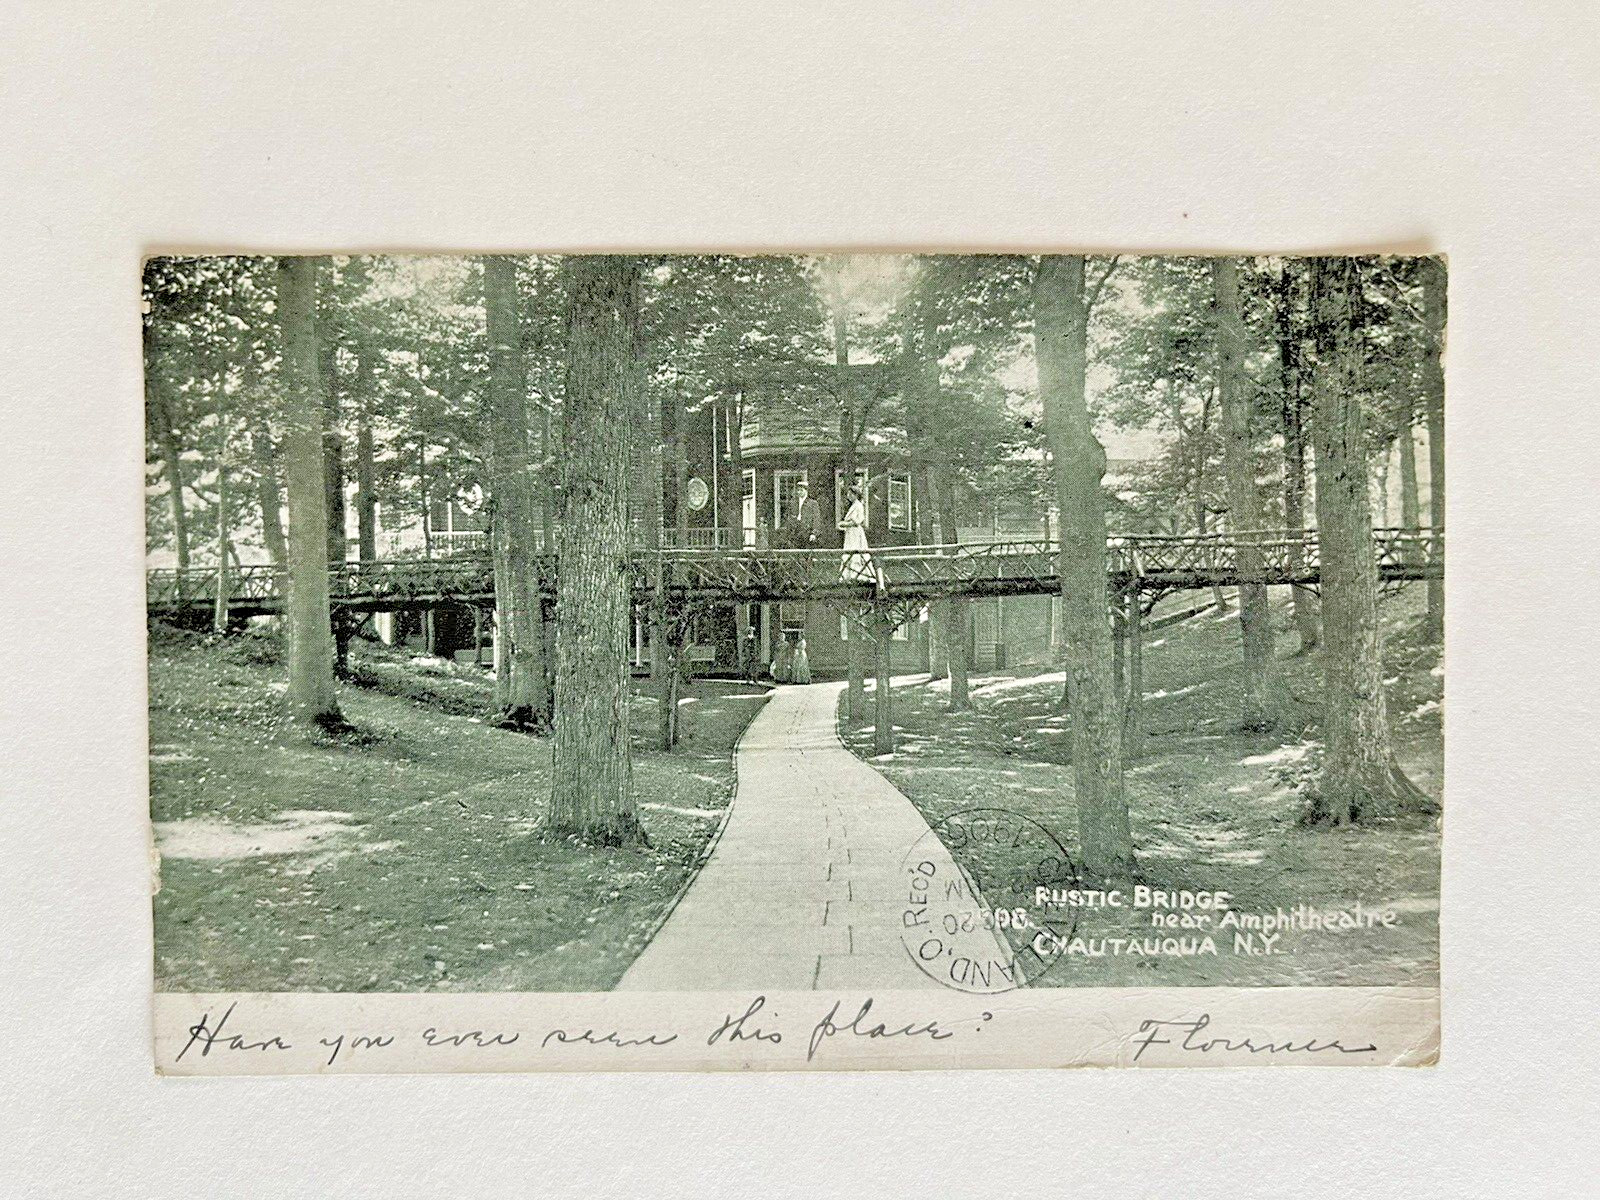 1906 Antique Vintage Postcard Rustic Bridge near Amphitheatre CHAUTAUQUA NY